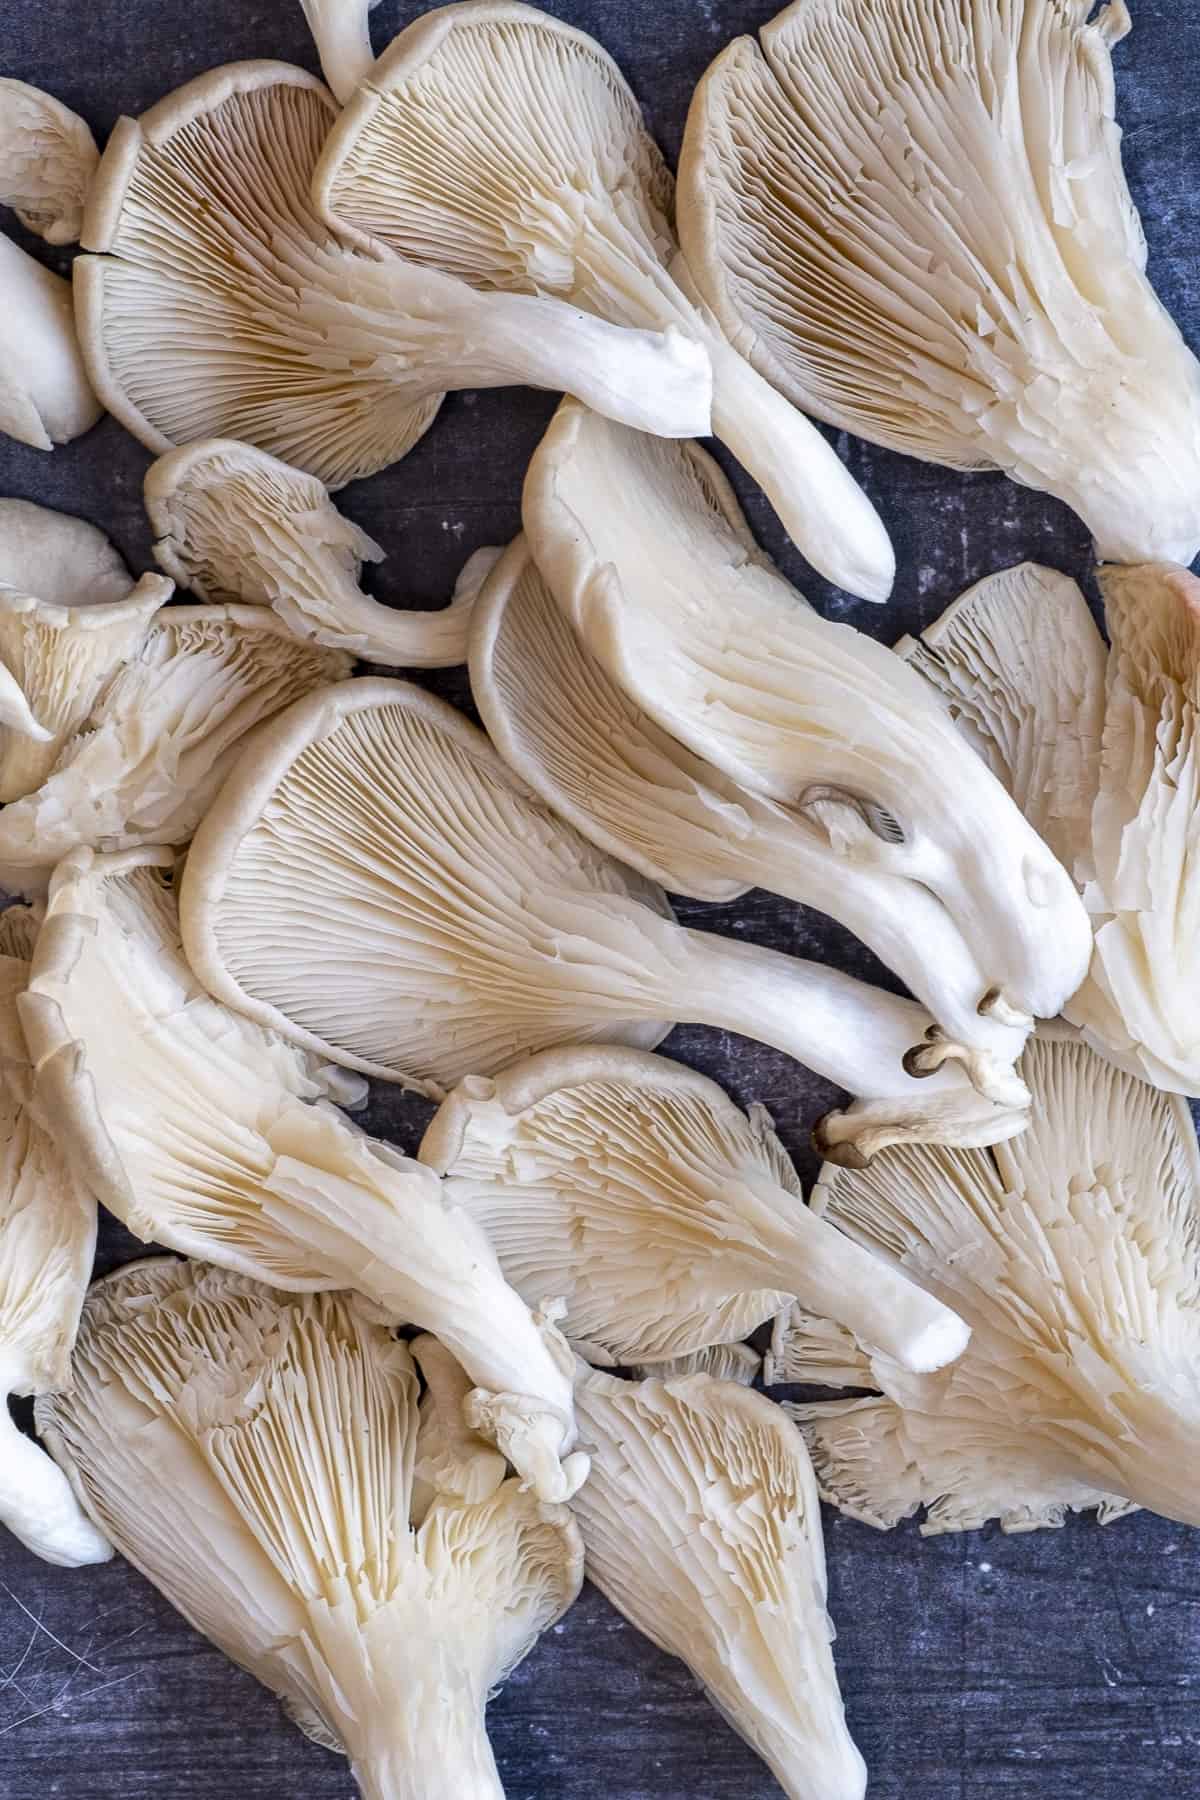 Oyster mushrooms on a dark background.